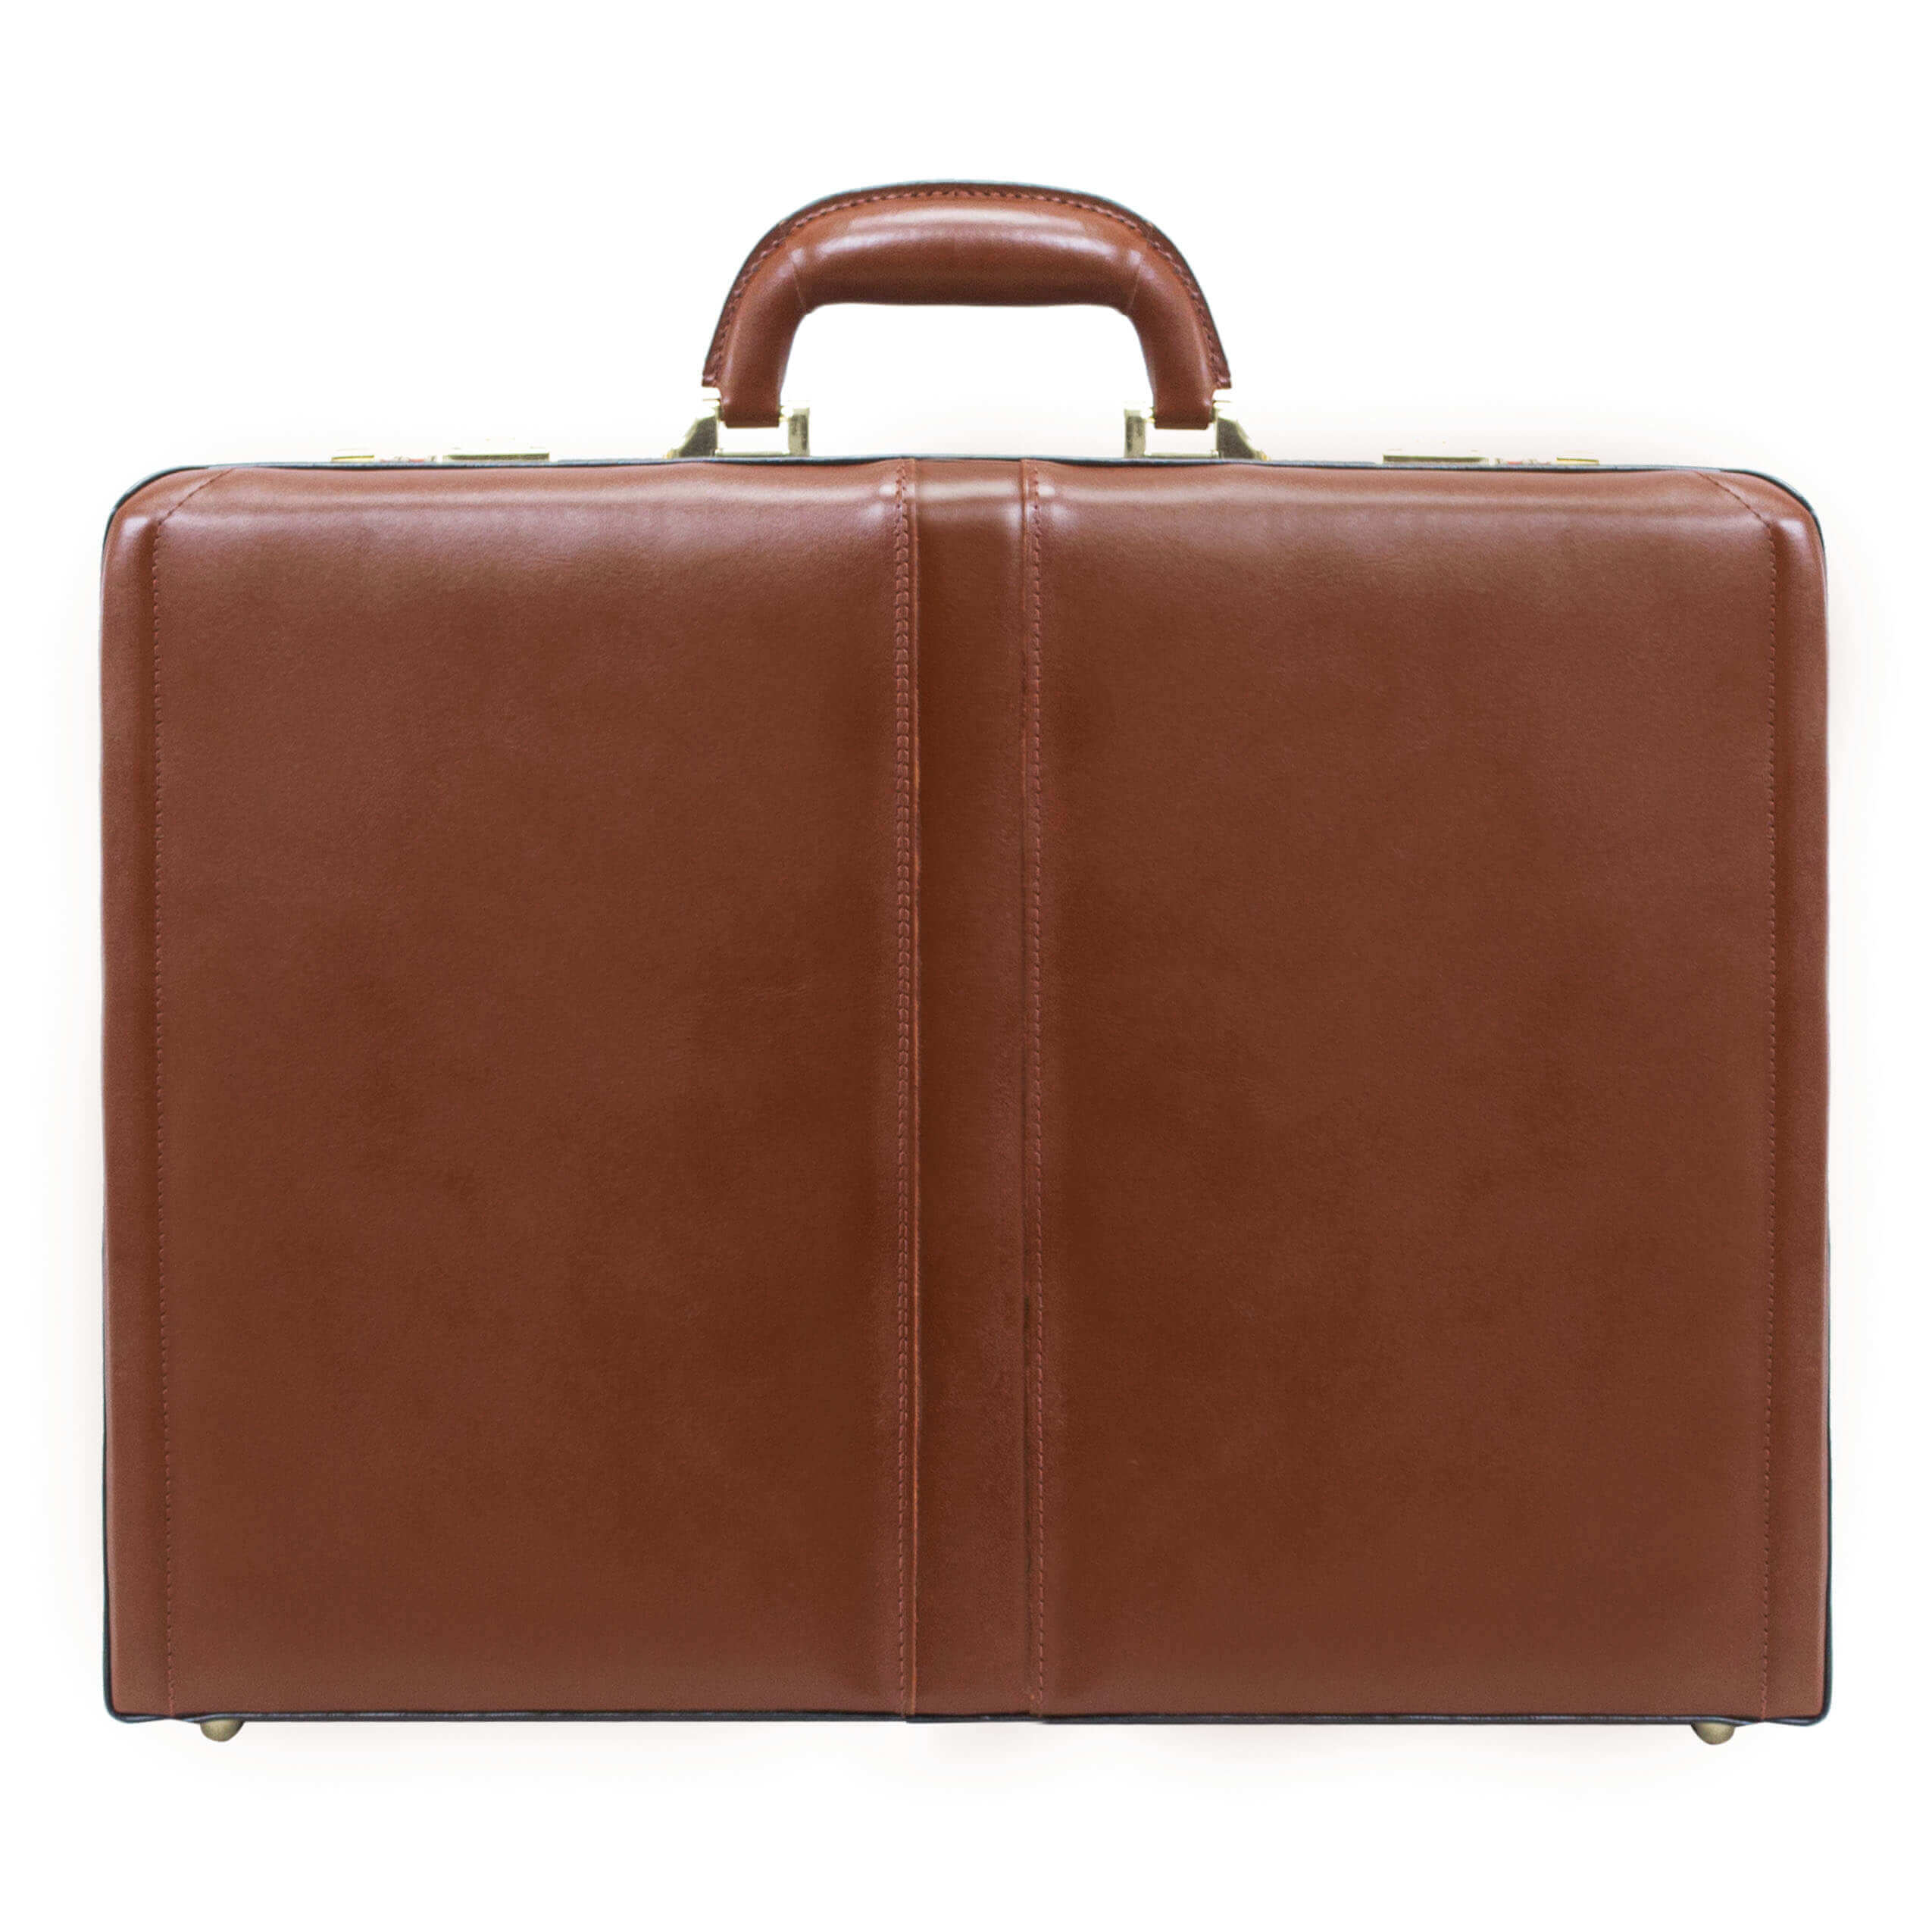 McKlein USA Reagan Leather Attache Case - best leather briefcases for men